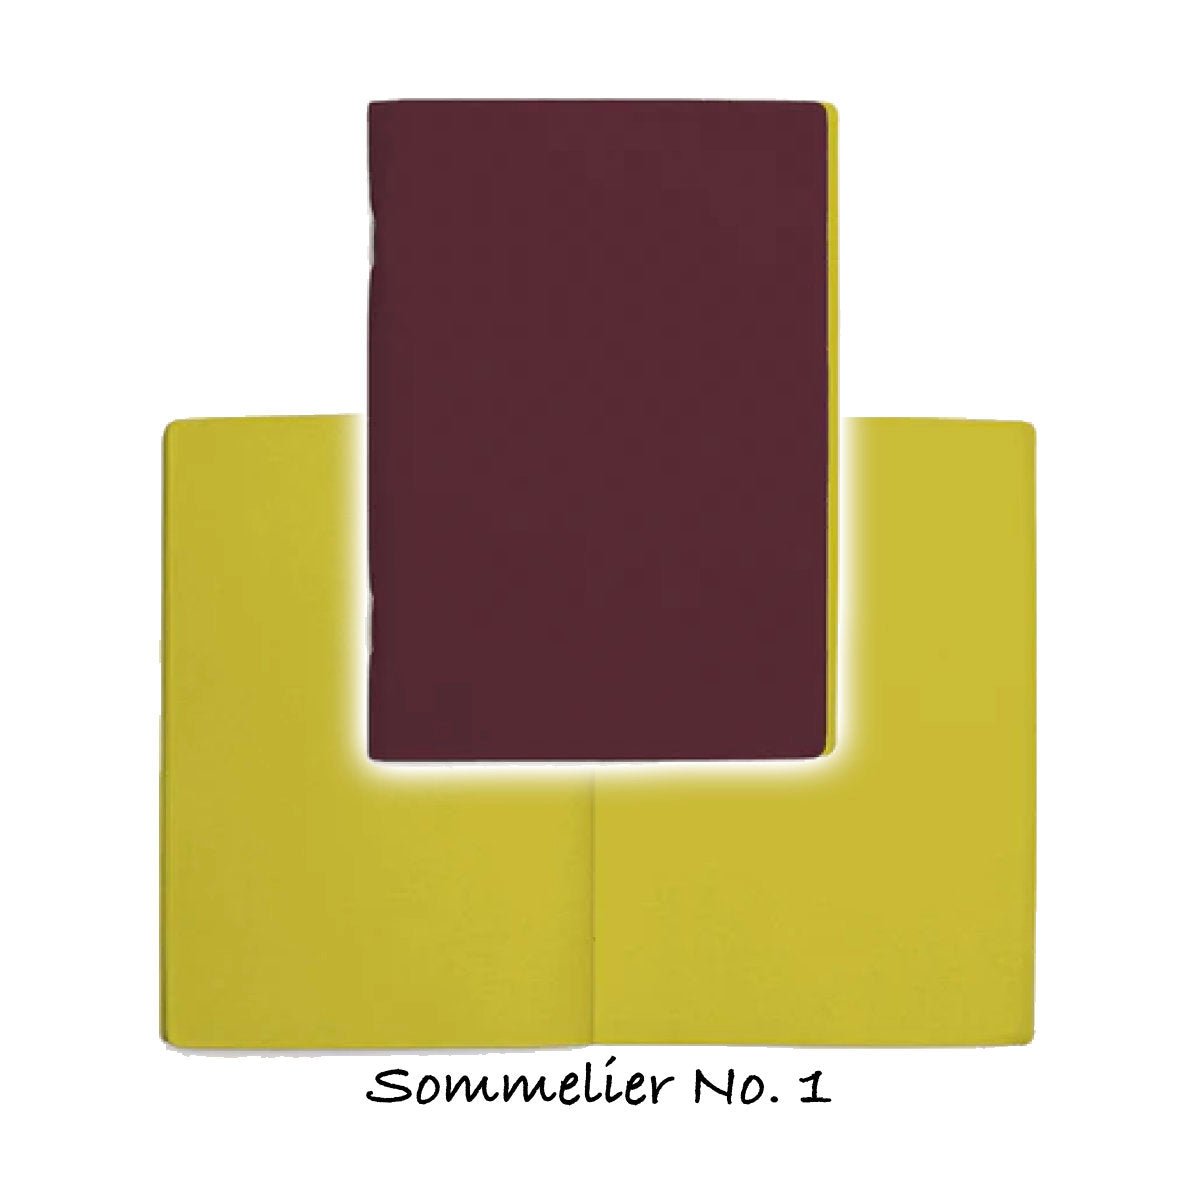 UGLYBOOKS - Sommeleir No. 1 - Single Notebook